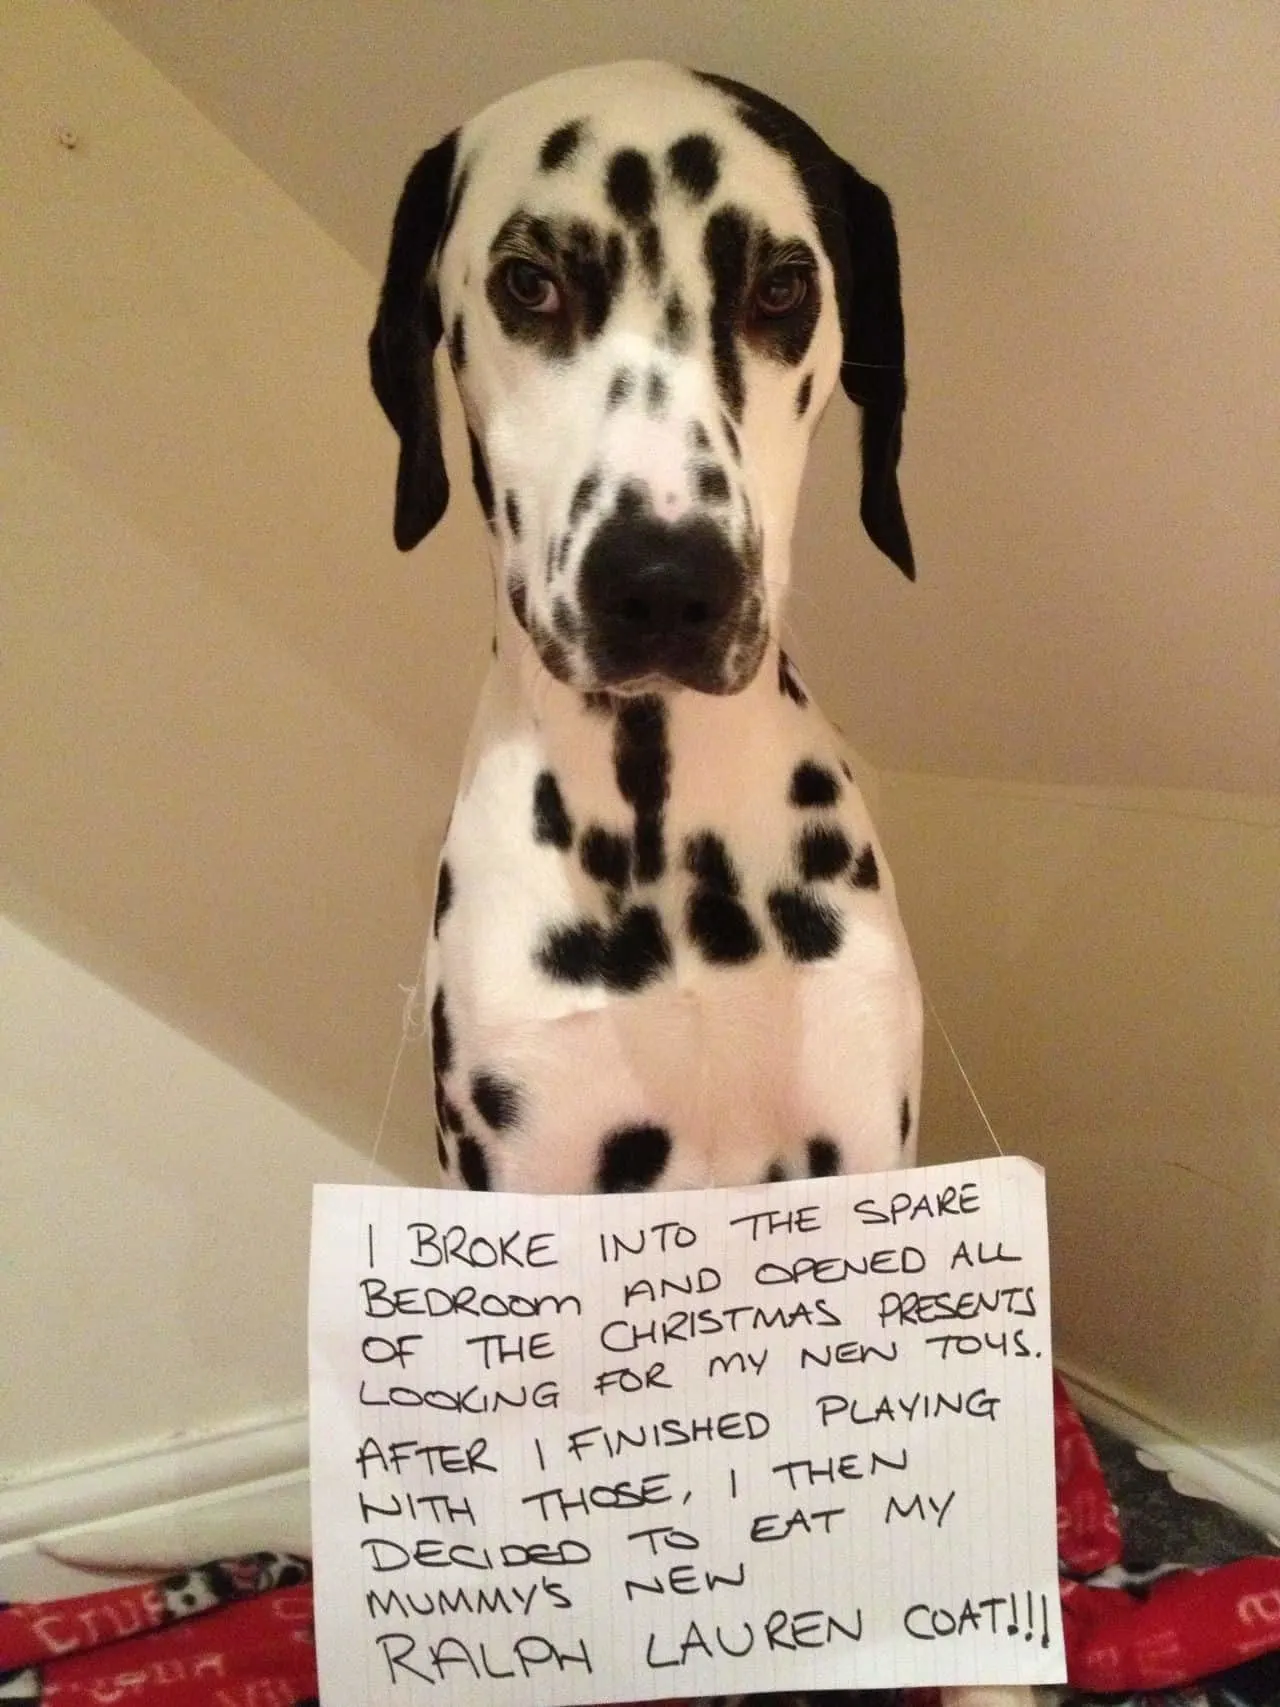 dalmatian dog being shamed